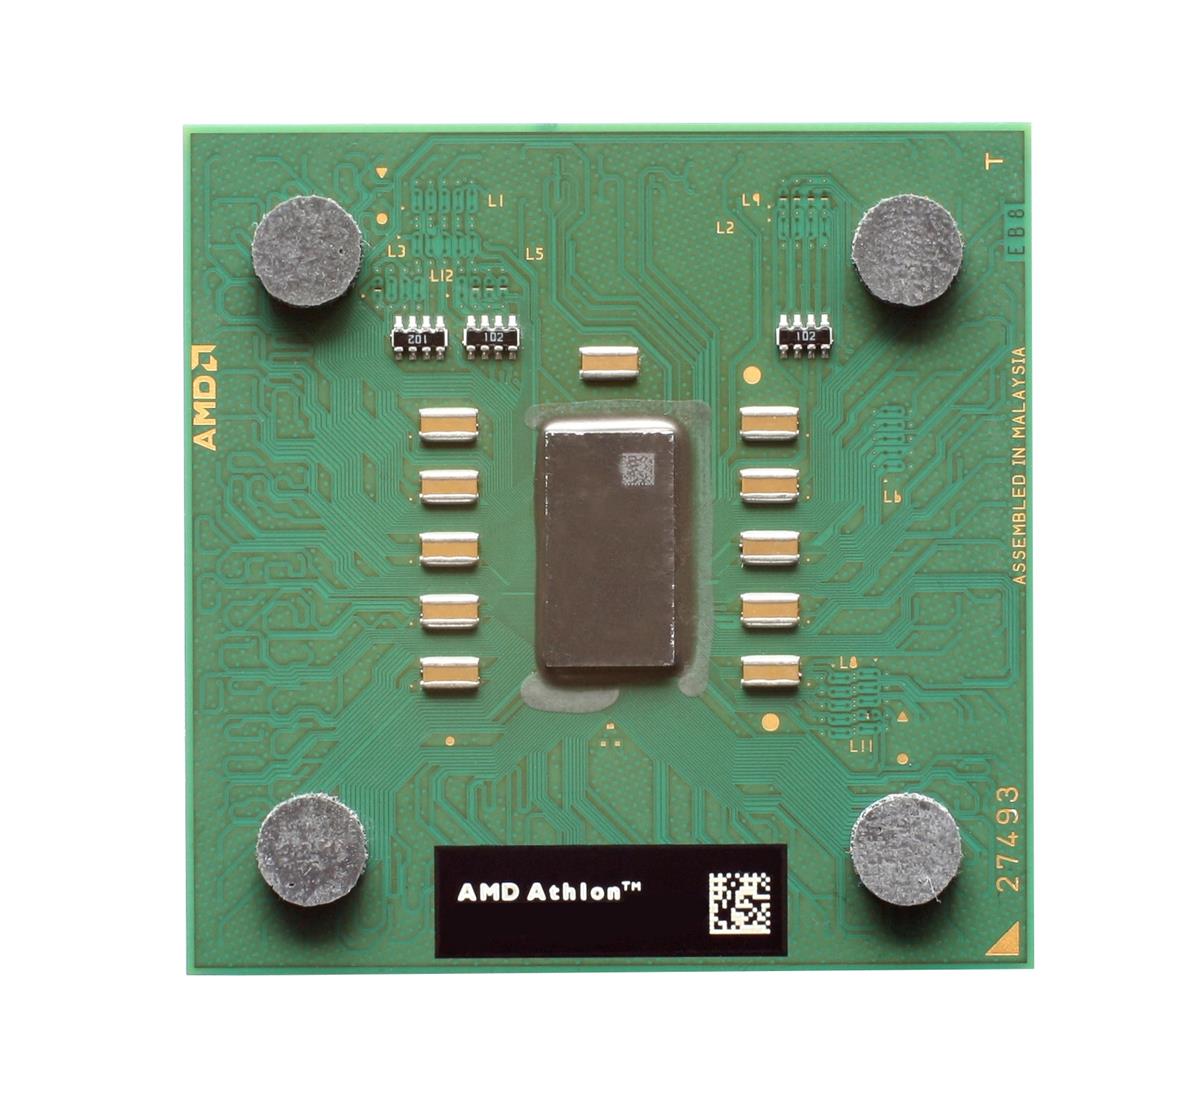 J291N Dell 1.80GHz 800MHz 2MB Cache Socket LGA775 Intel Core 2 Duo E4300 Dual-Core Processor Upgrade